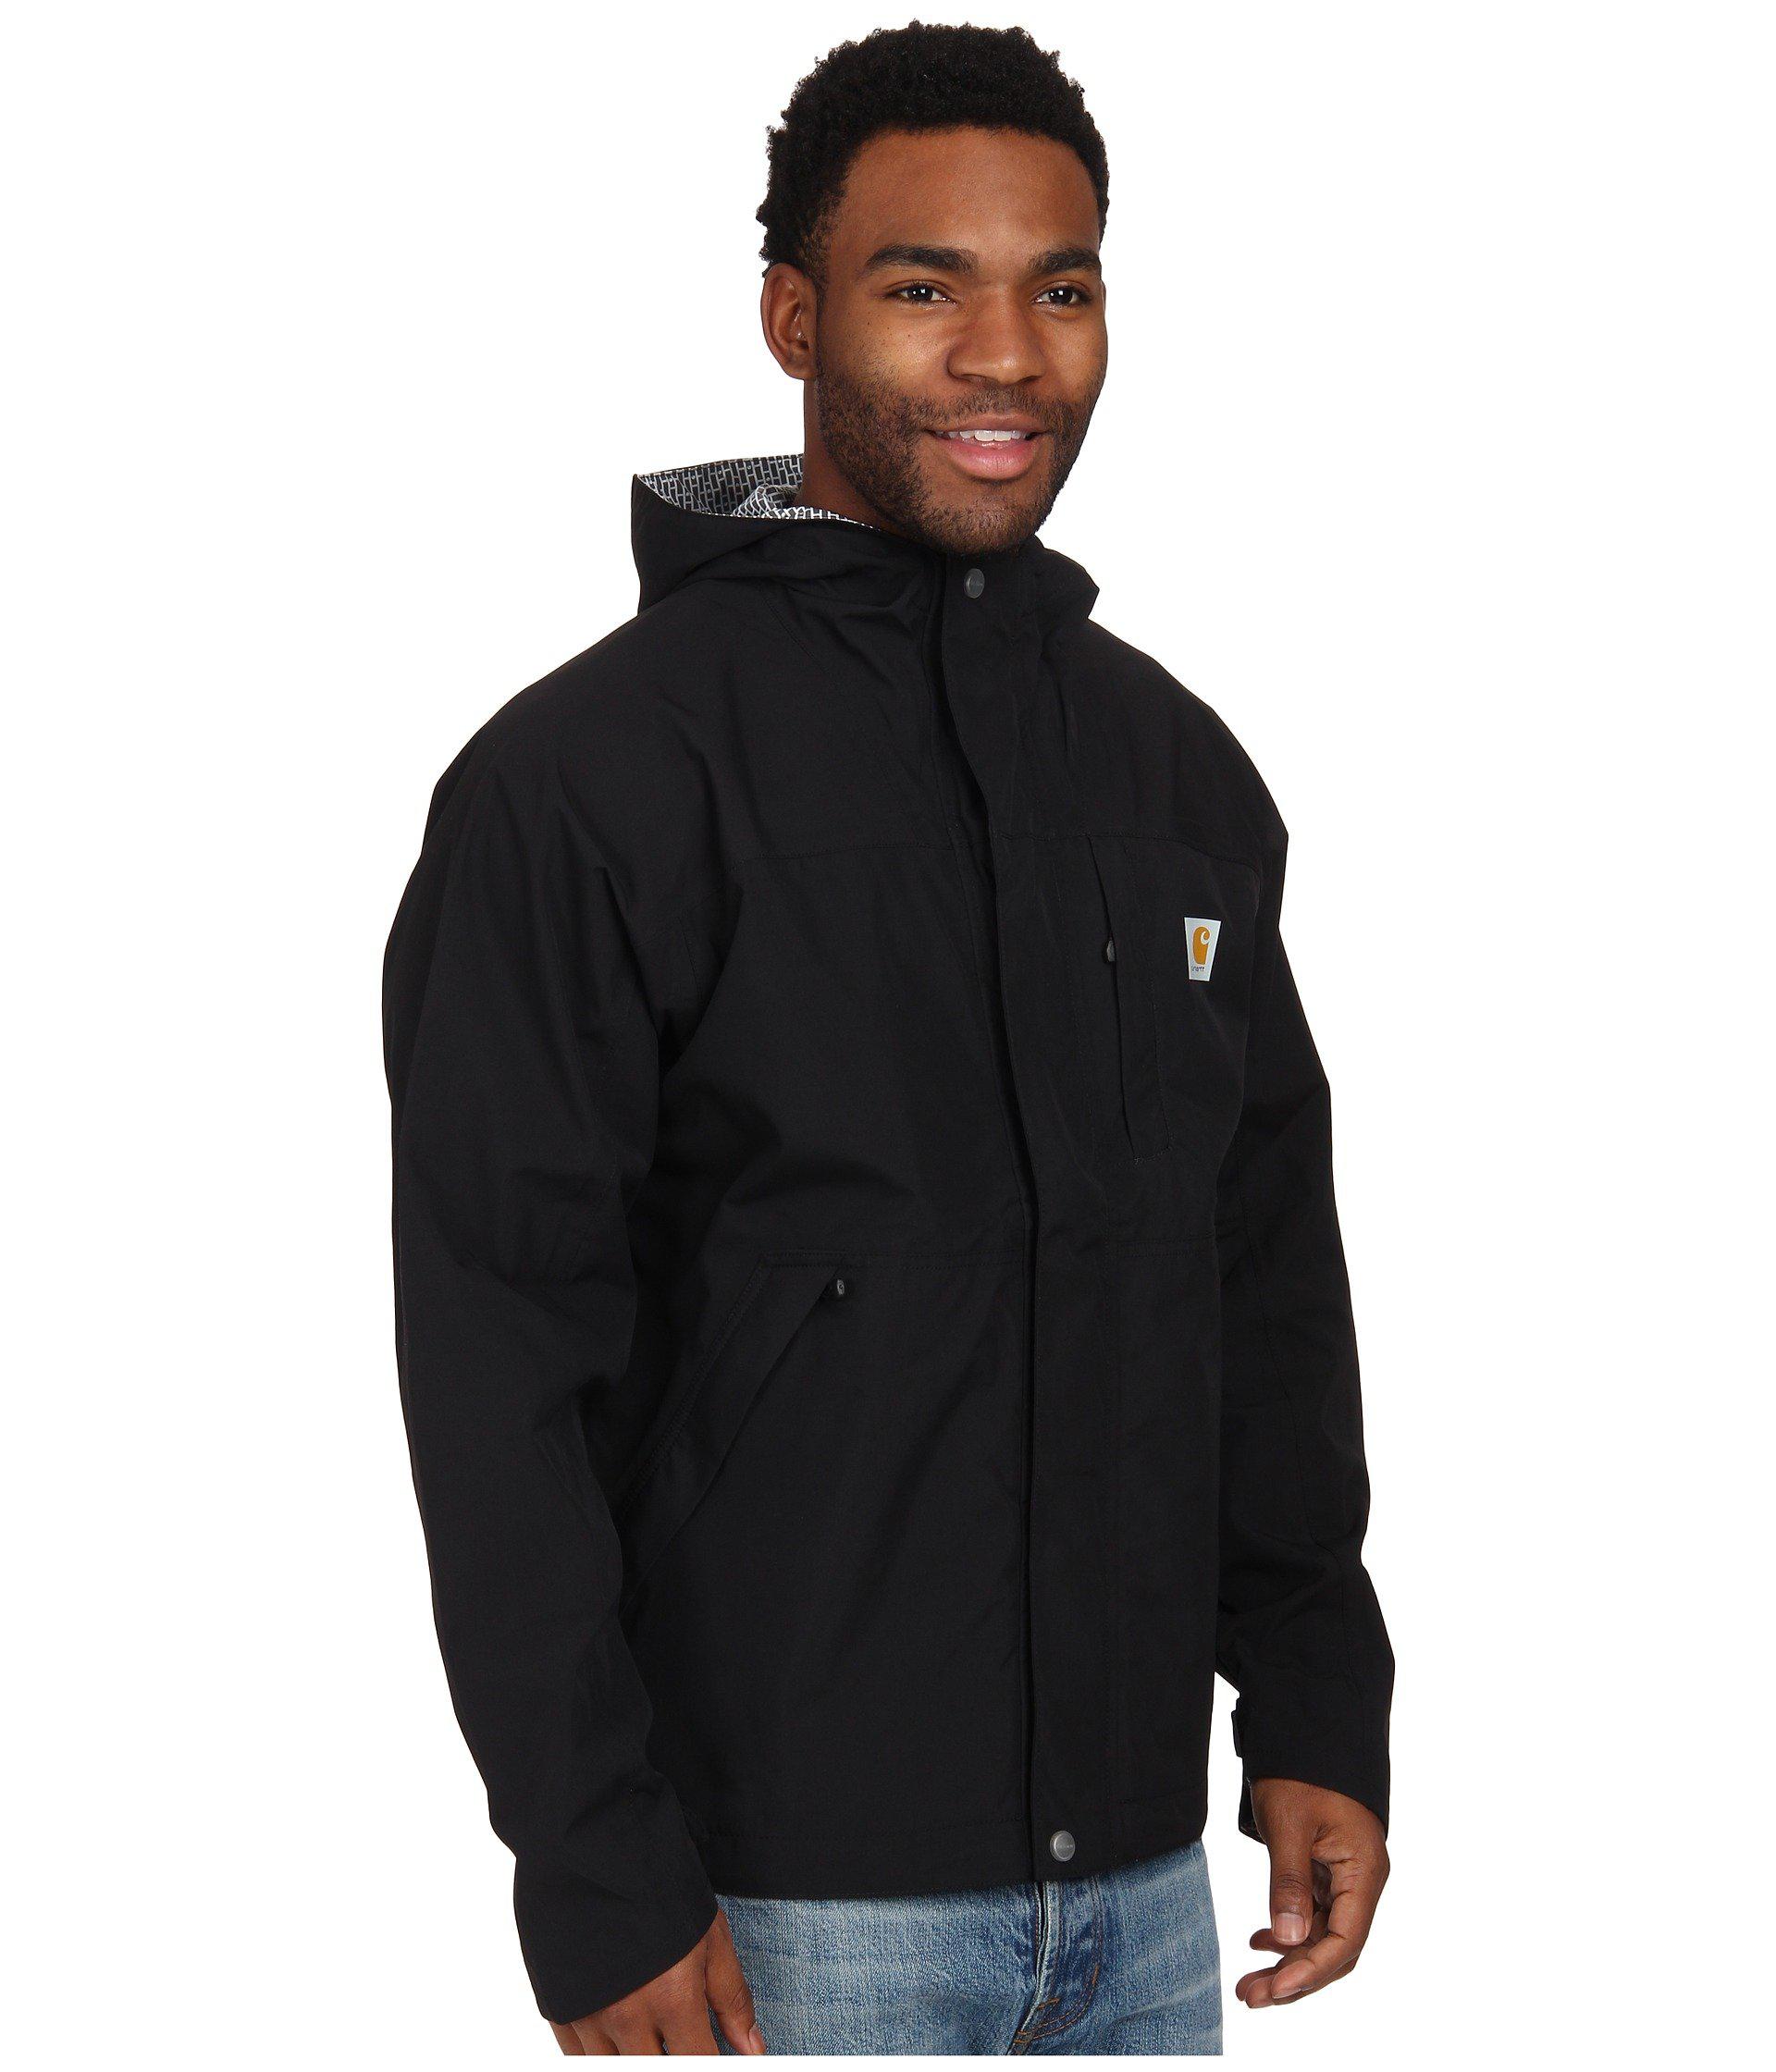 Carhartt Shoreline Vapor Jacket in Black for Men - Lyst